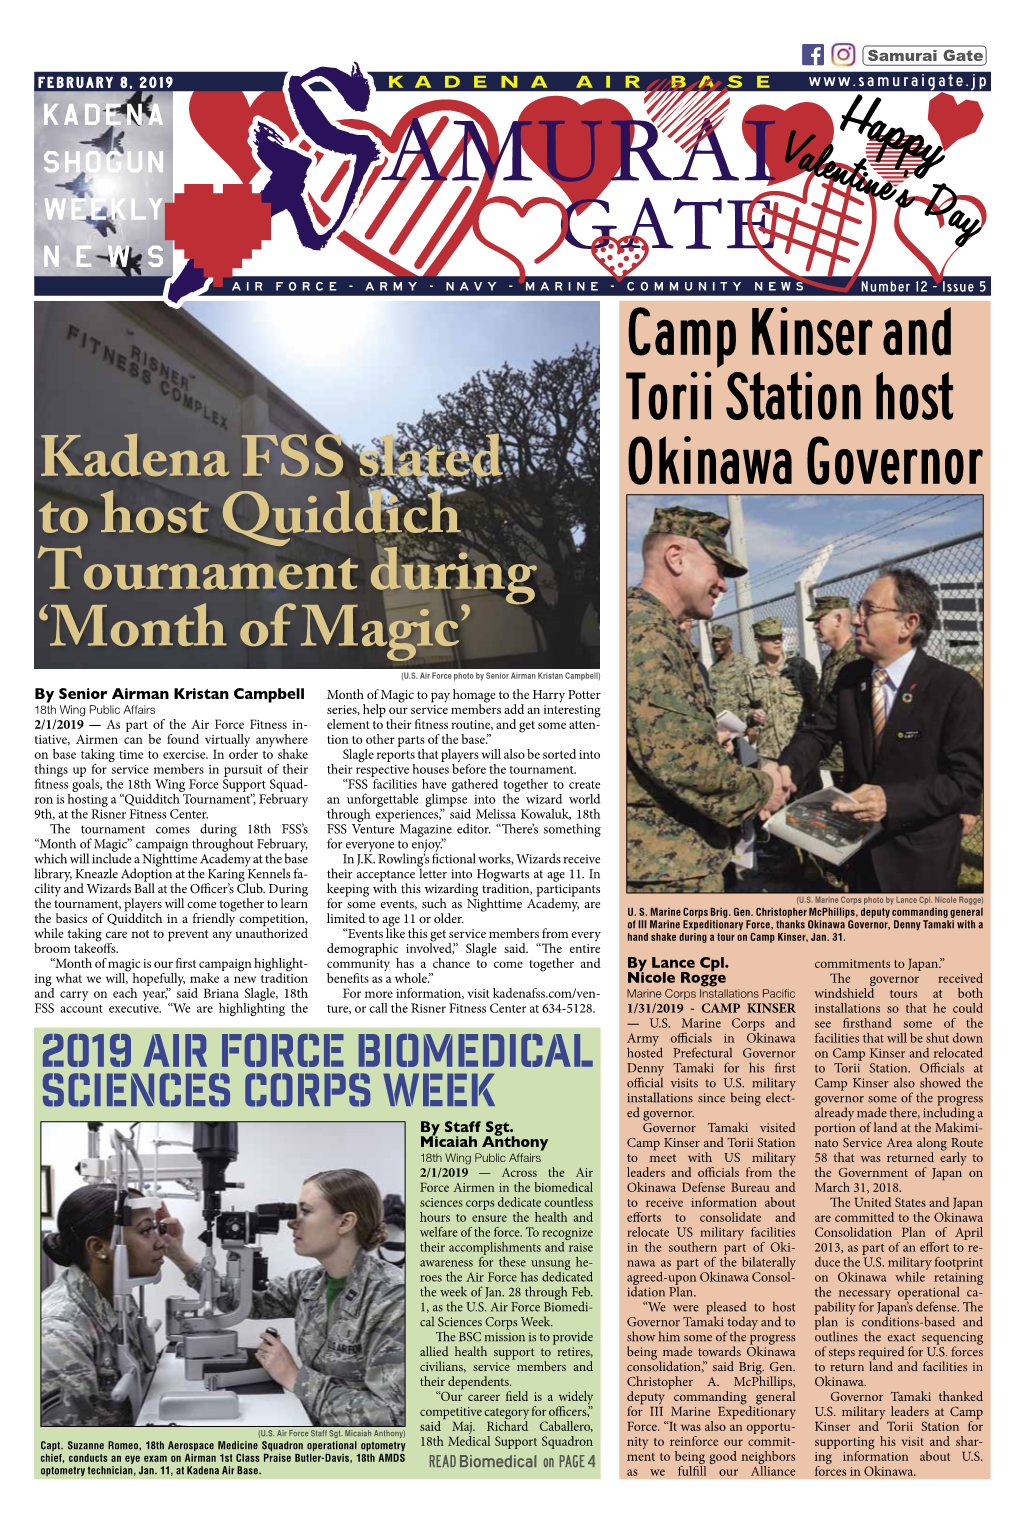 Camp Kinser and Torii Station Host Okinawa Governor